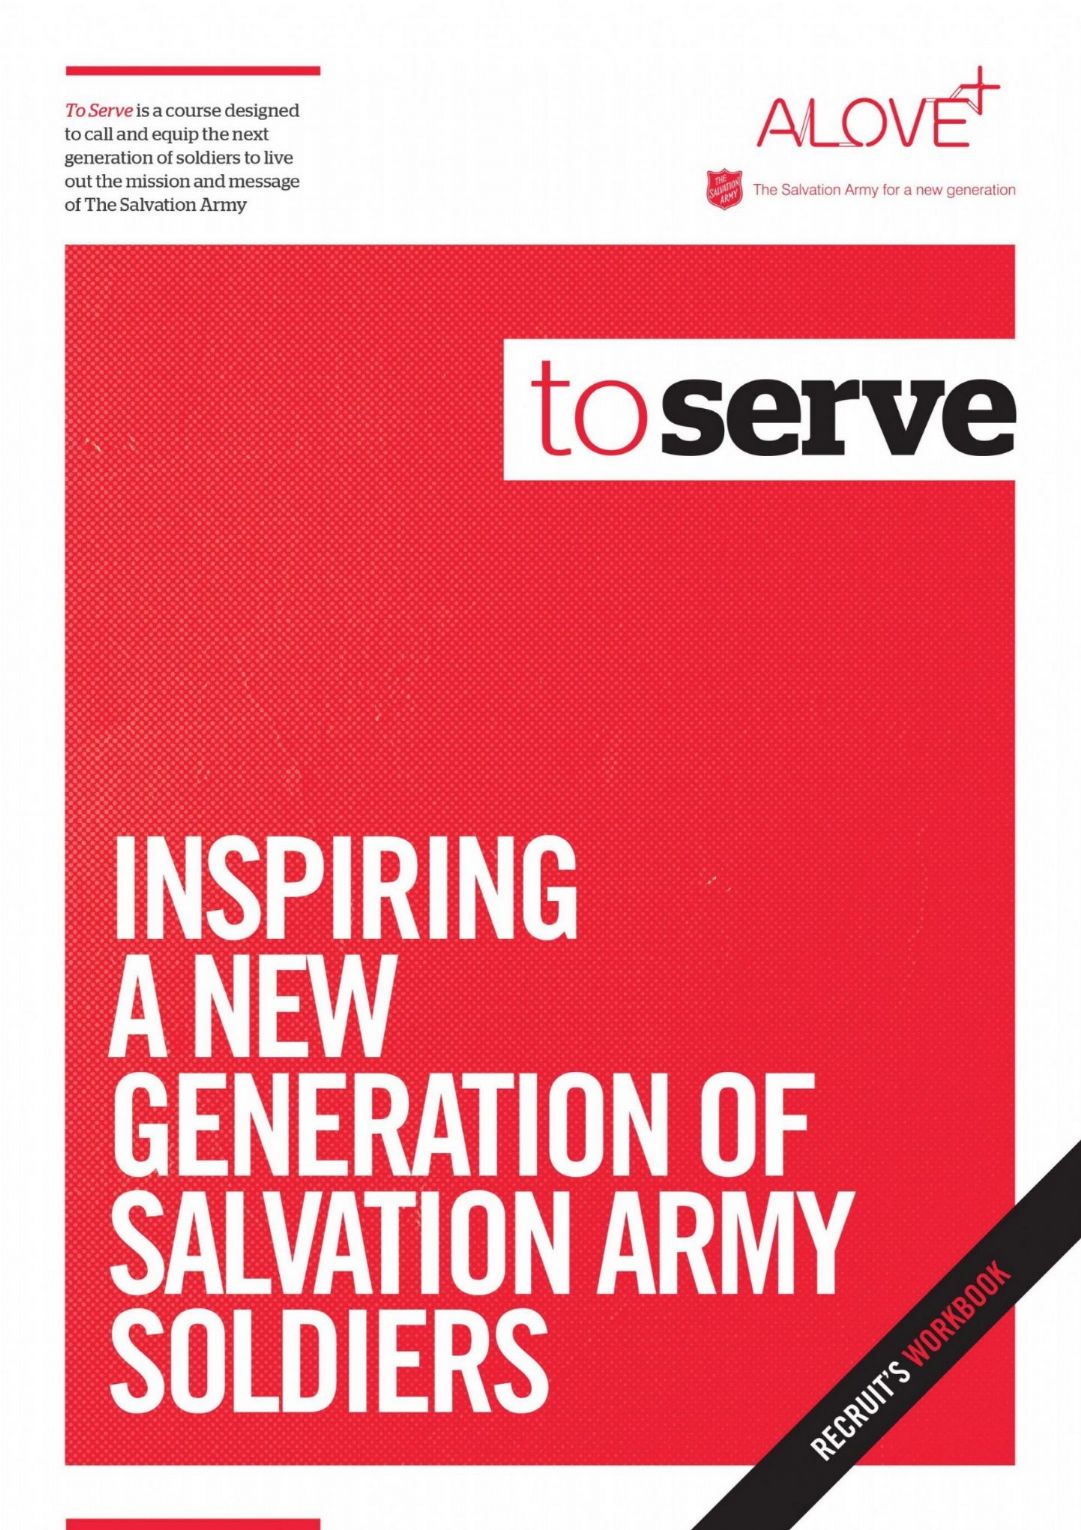 To Serve: Senior Soldier Recruit's Workbook (Group Edition)